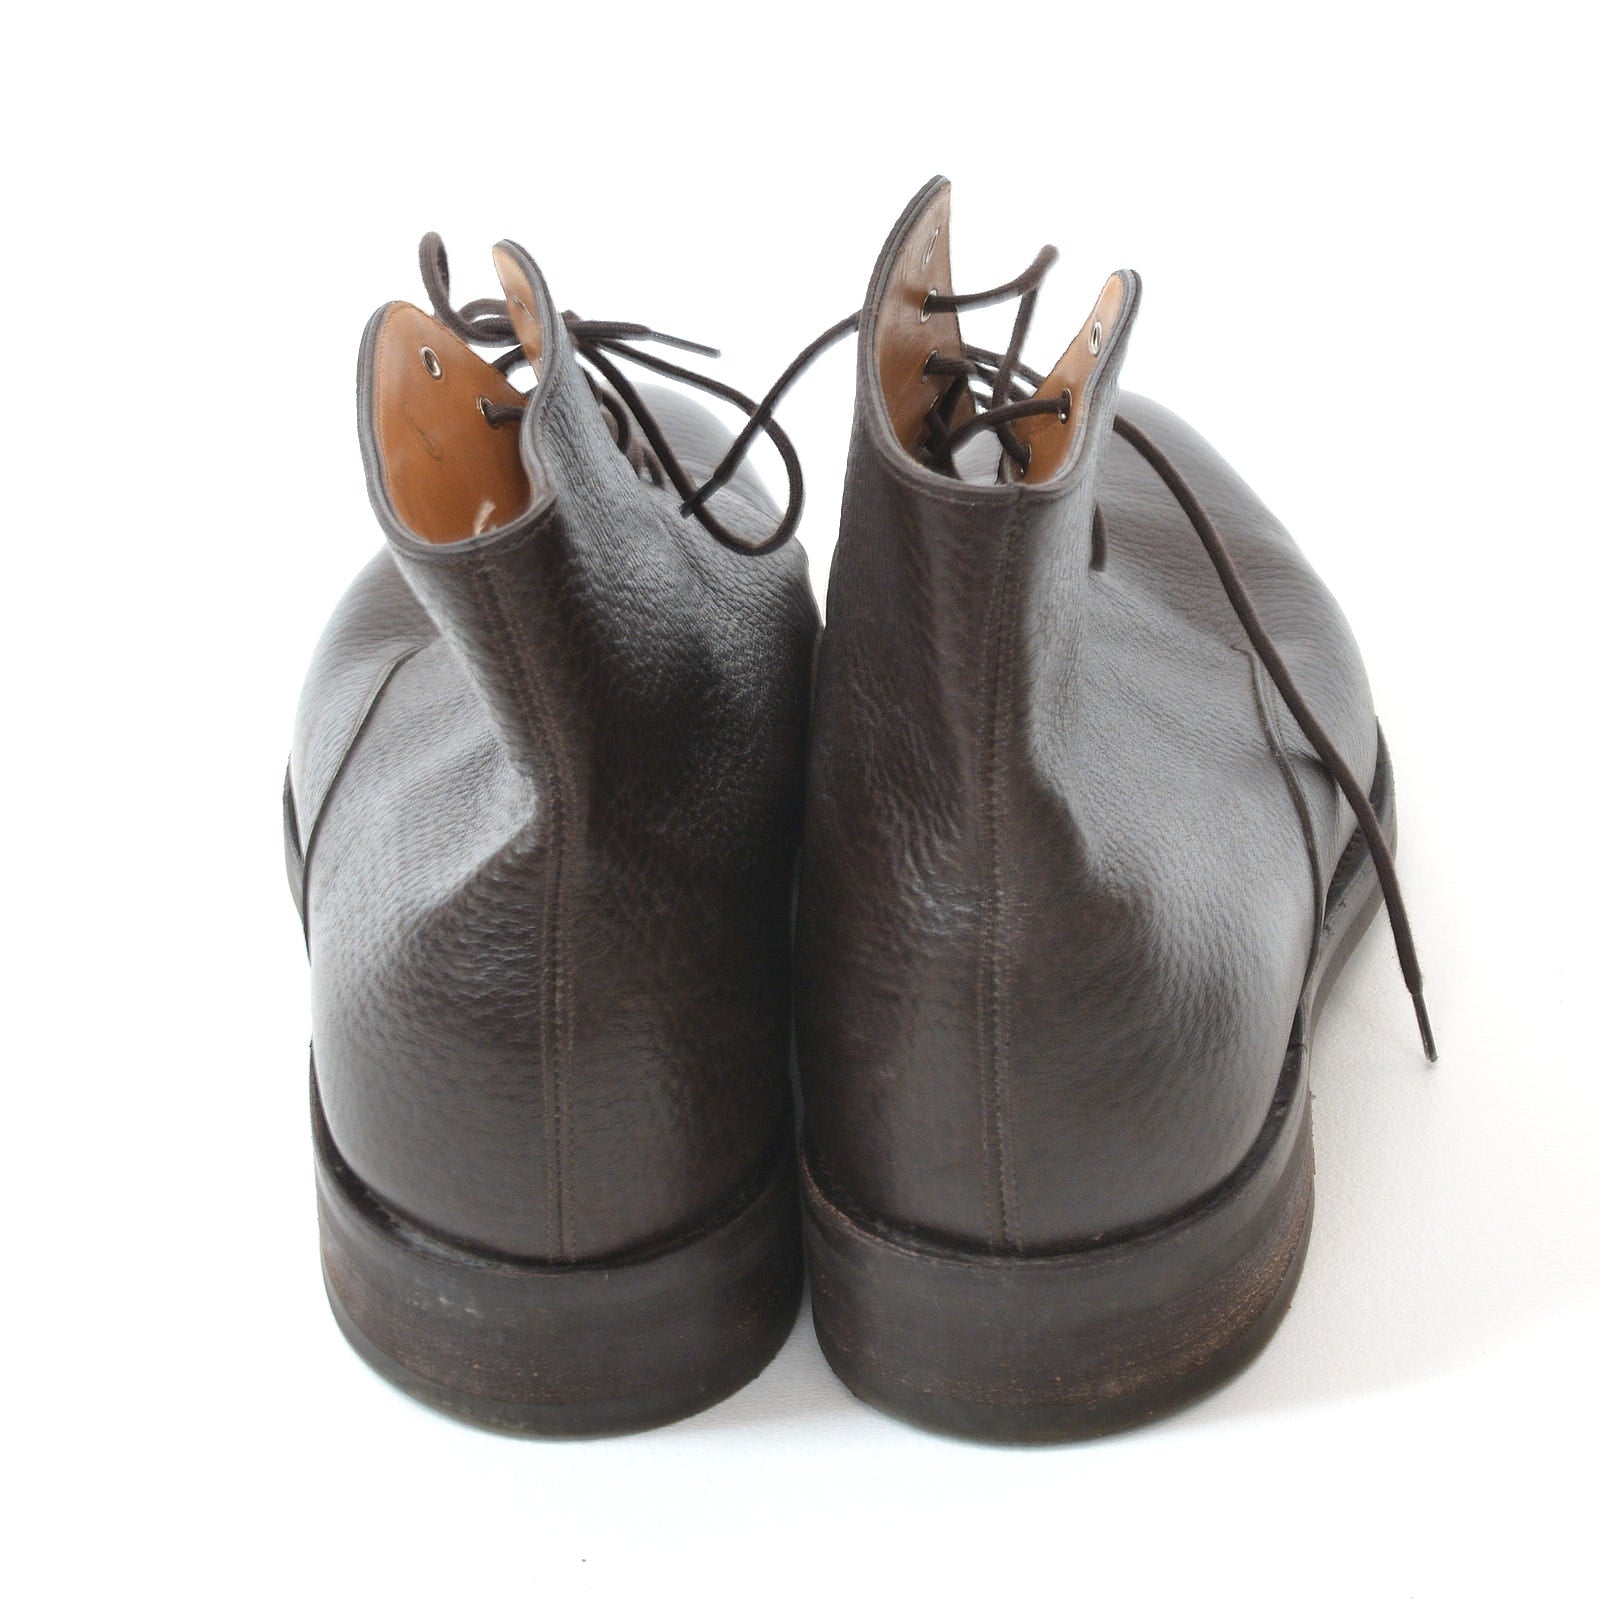 JOHN LOBB "Fern" Brown Grain Calf Leather Derby Boots Shoes UK 8.5E US 9.5 Last 7000 JOHN LOBB